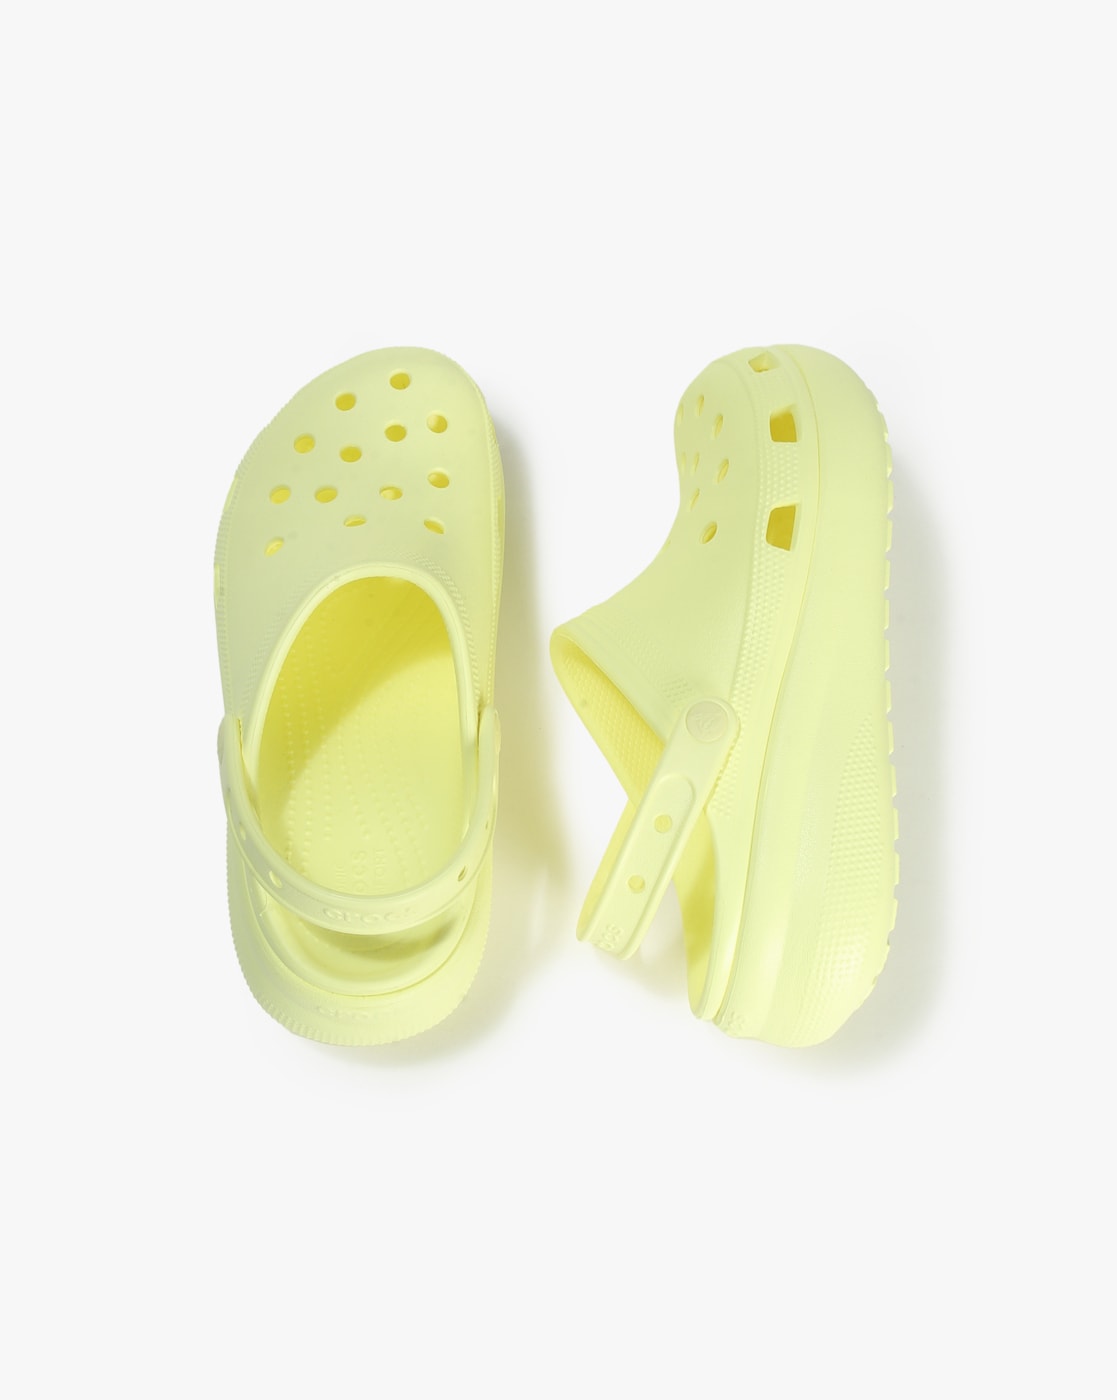 Buy Crocs Unisex Ralen Navy Sandal-4.5 Kids UK (15908-410) at Amazon.in